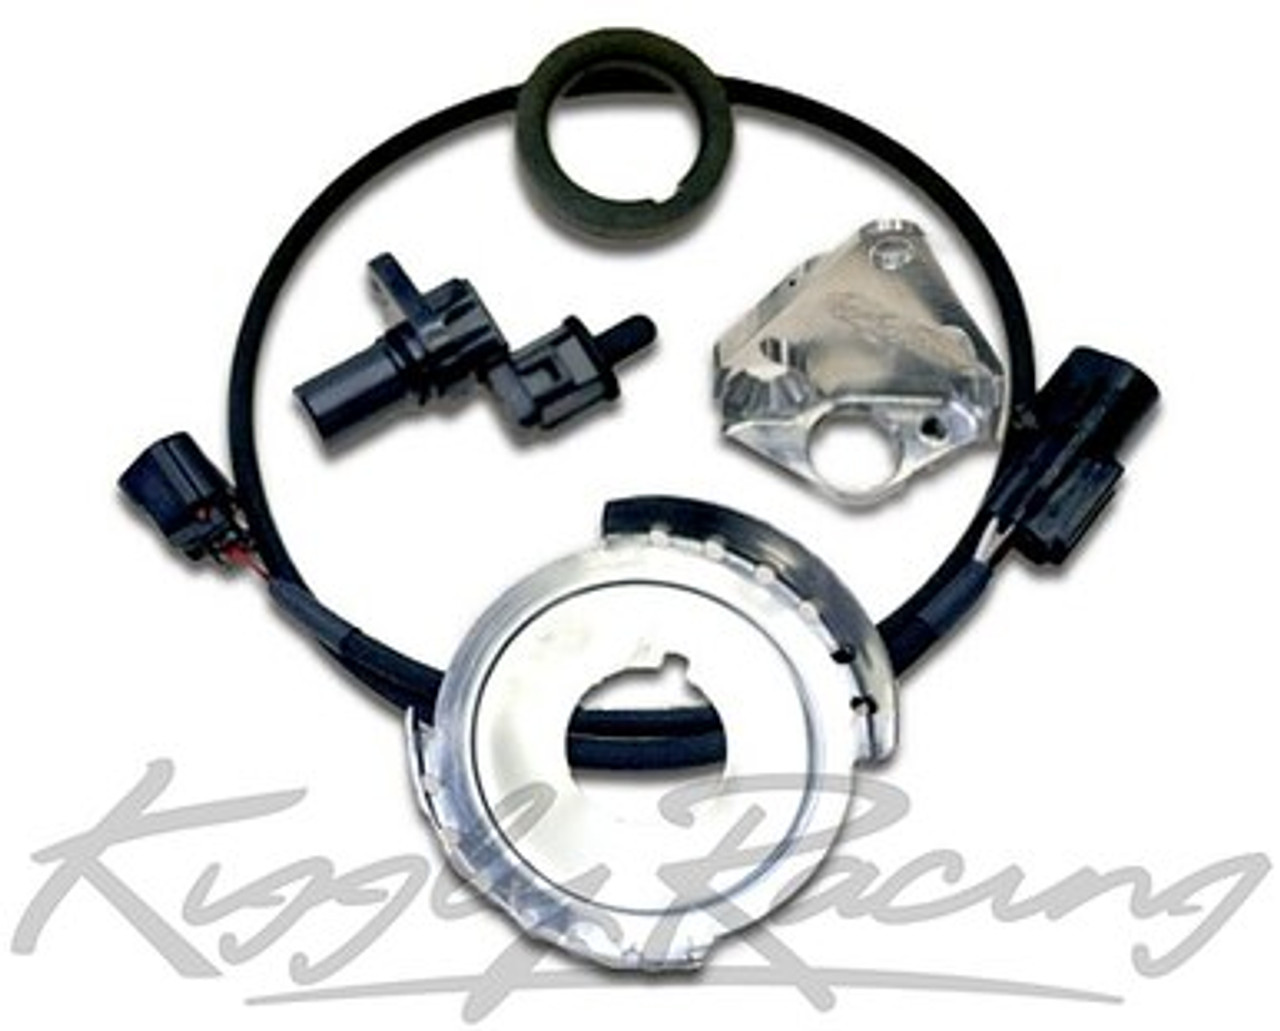 Kiggly Racing Crank Trigger Sensor Kit, Standard 2-Tooth Signal